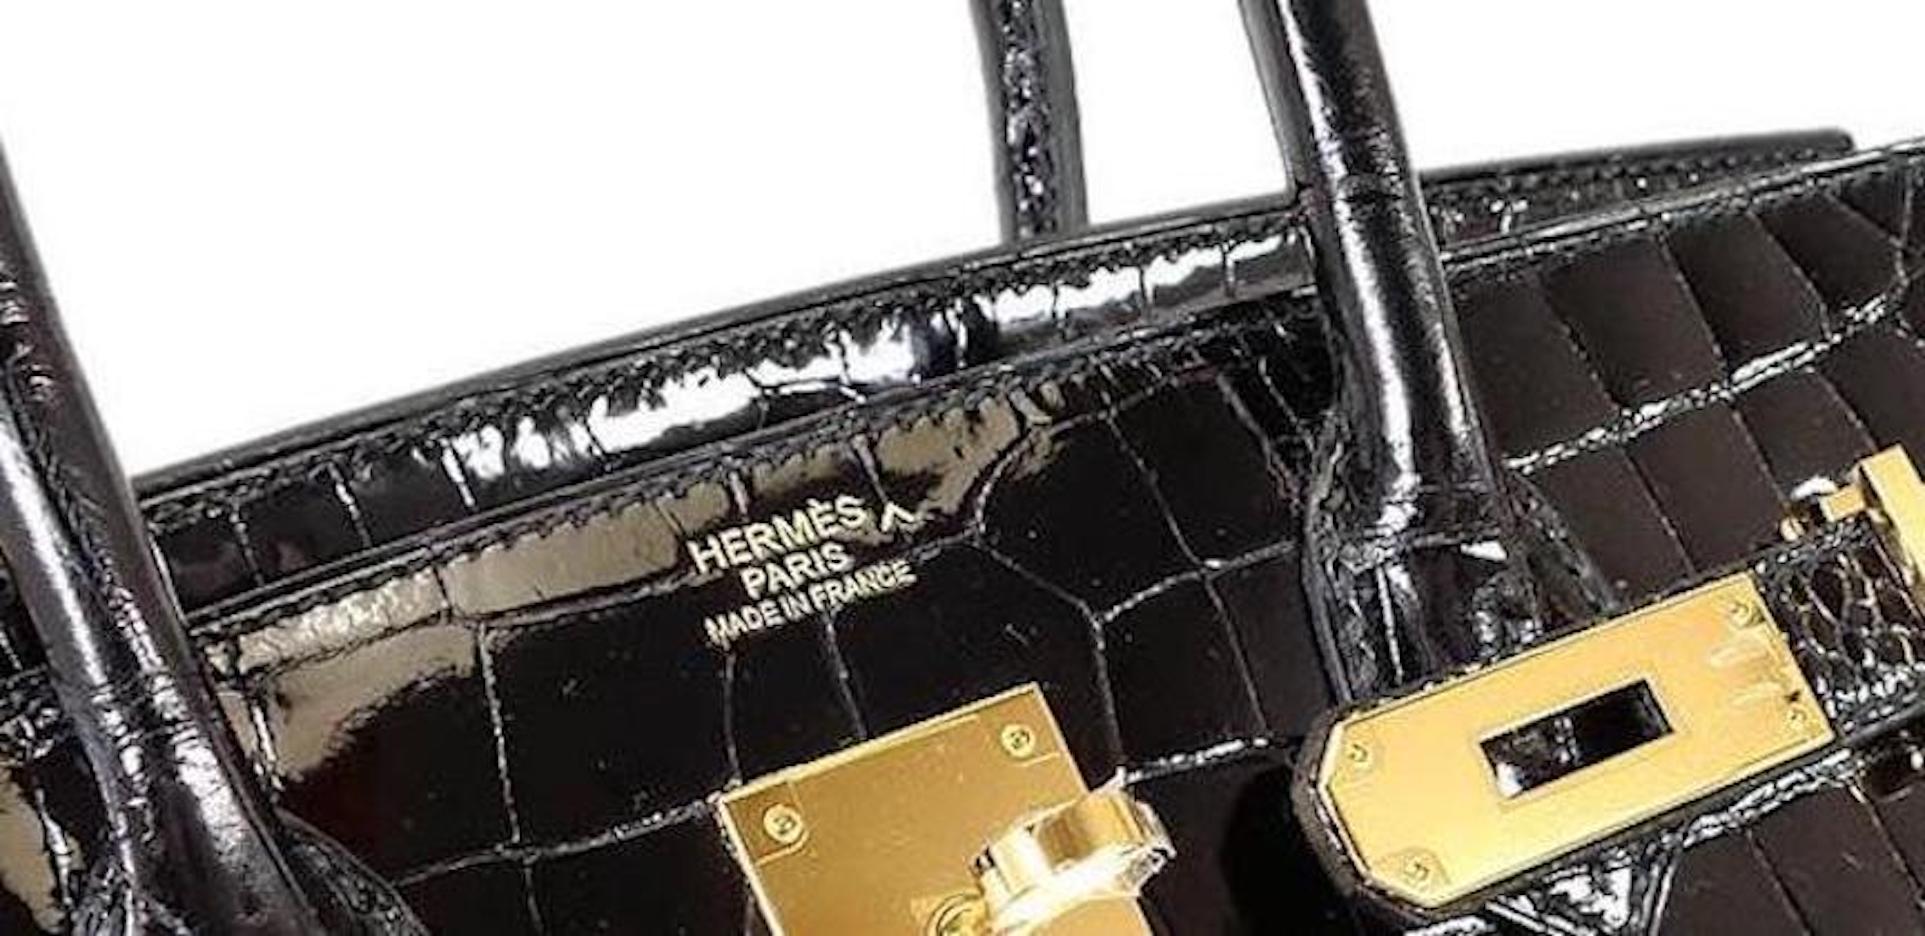 Black Hermes Birkin 30 NEW Rare Shiny Crocodile Top Handle Satchel Tote Bag in Box